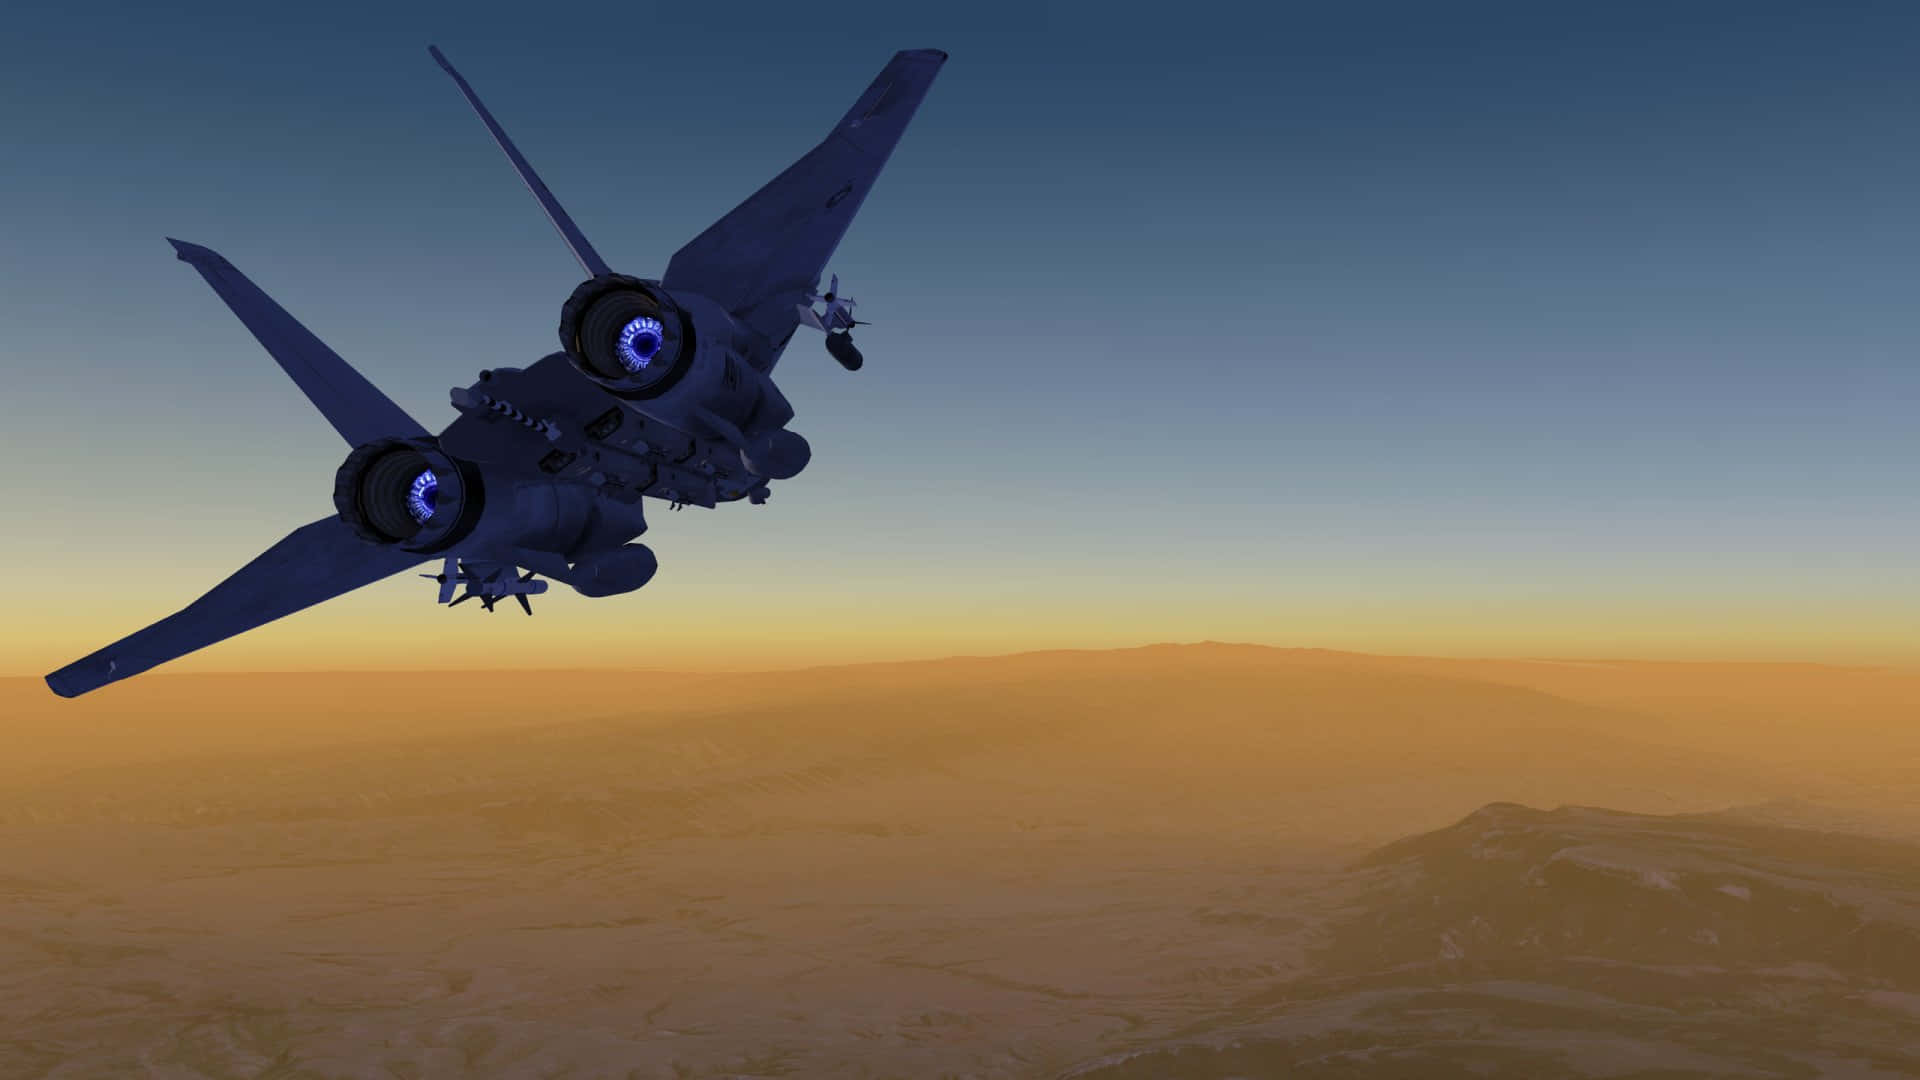 Experience the sheer thrill of flight with Microsoft Flight Simulator